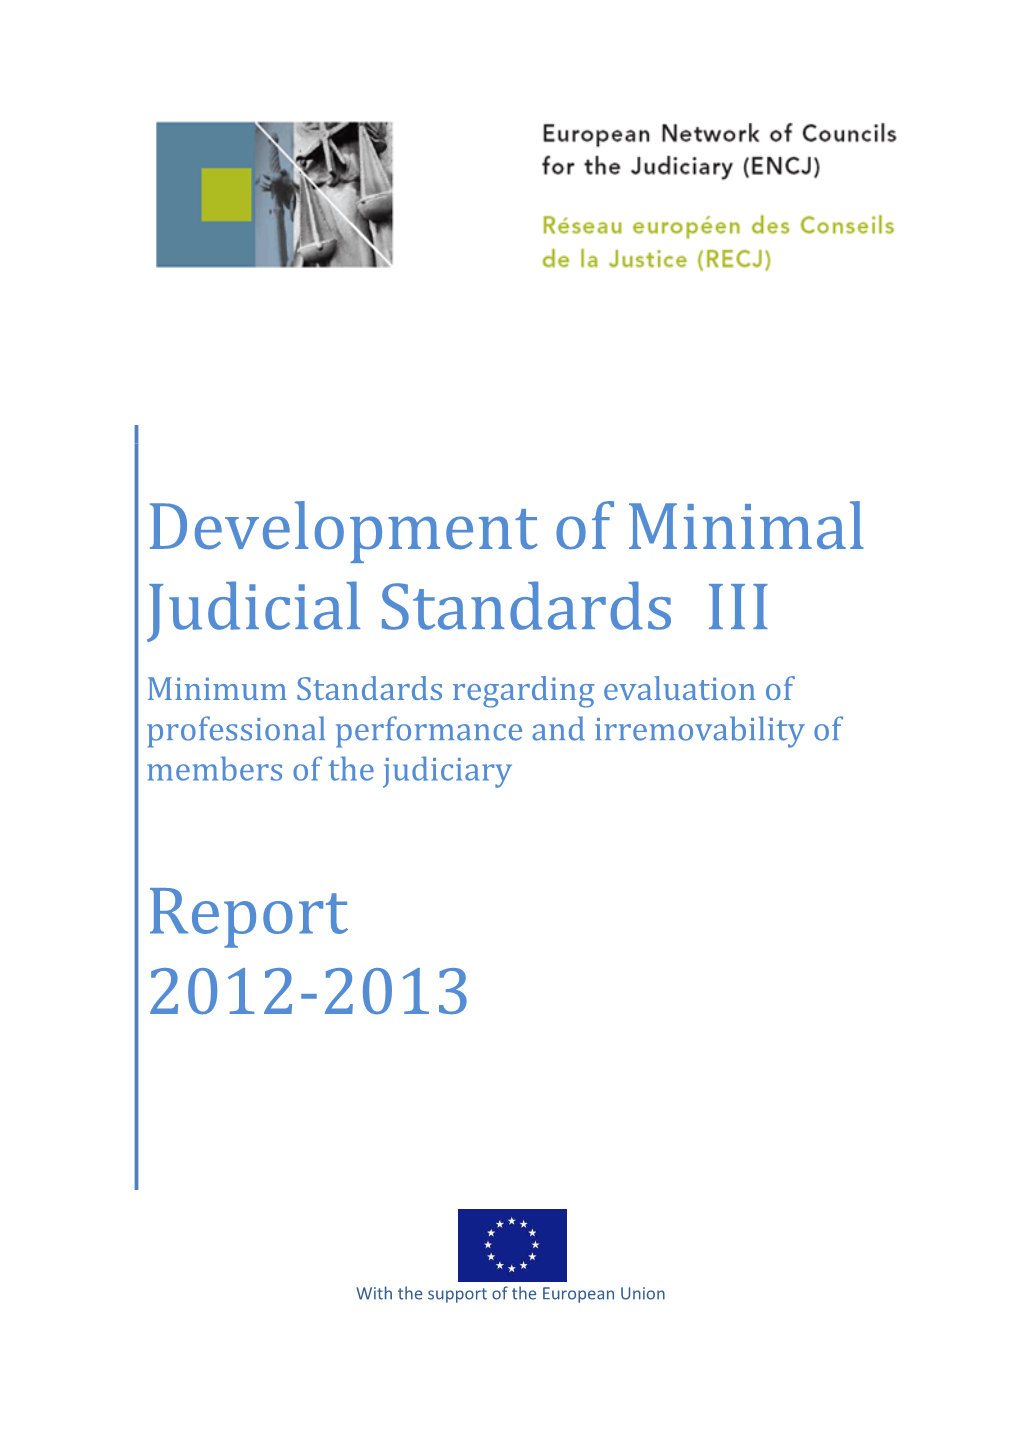 Development of Min Judicial Standards Report 2012-201